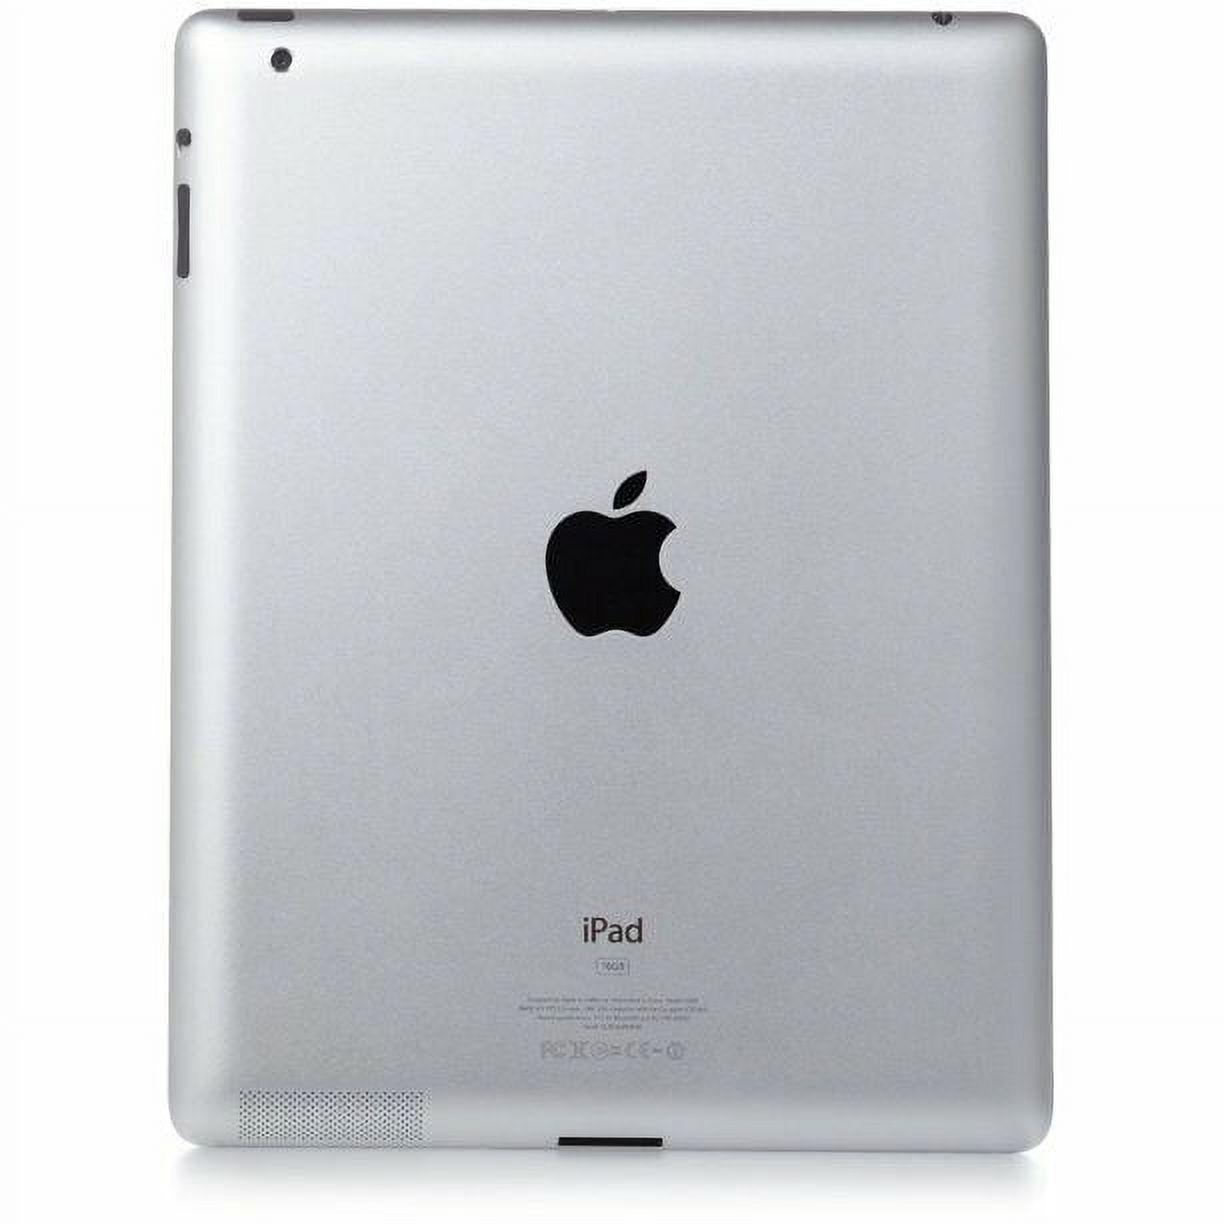 Restored Apple iPad 2 9.7" Display 16GB Wi-Fi OnlyTabel PC (Black) - MC769LL/A (Refurbished) - image 6 of 7